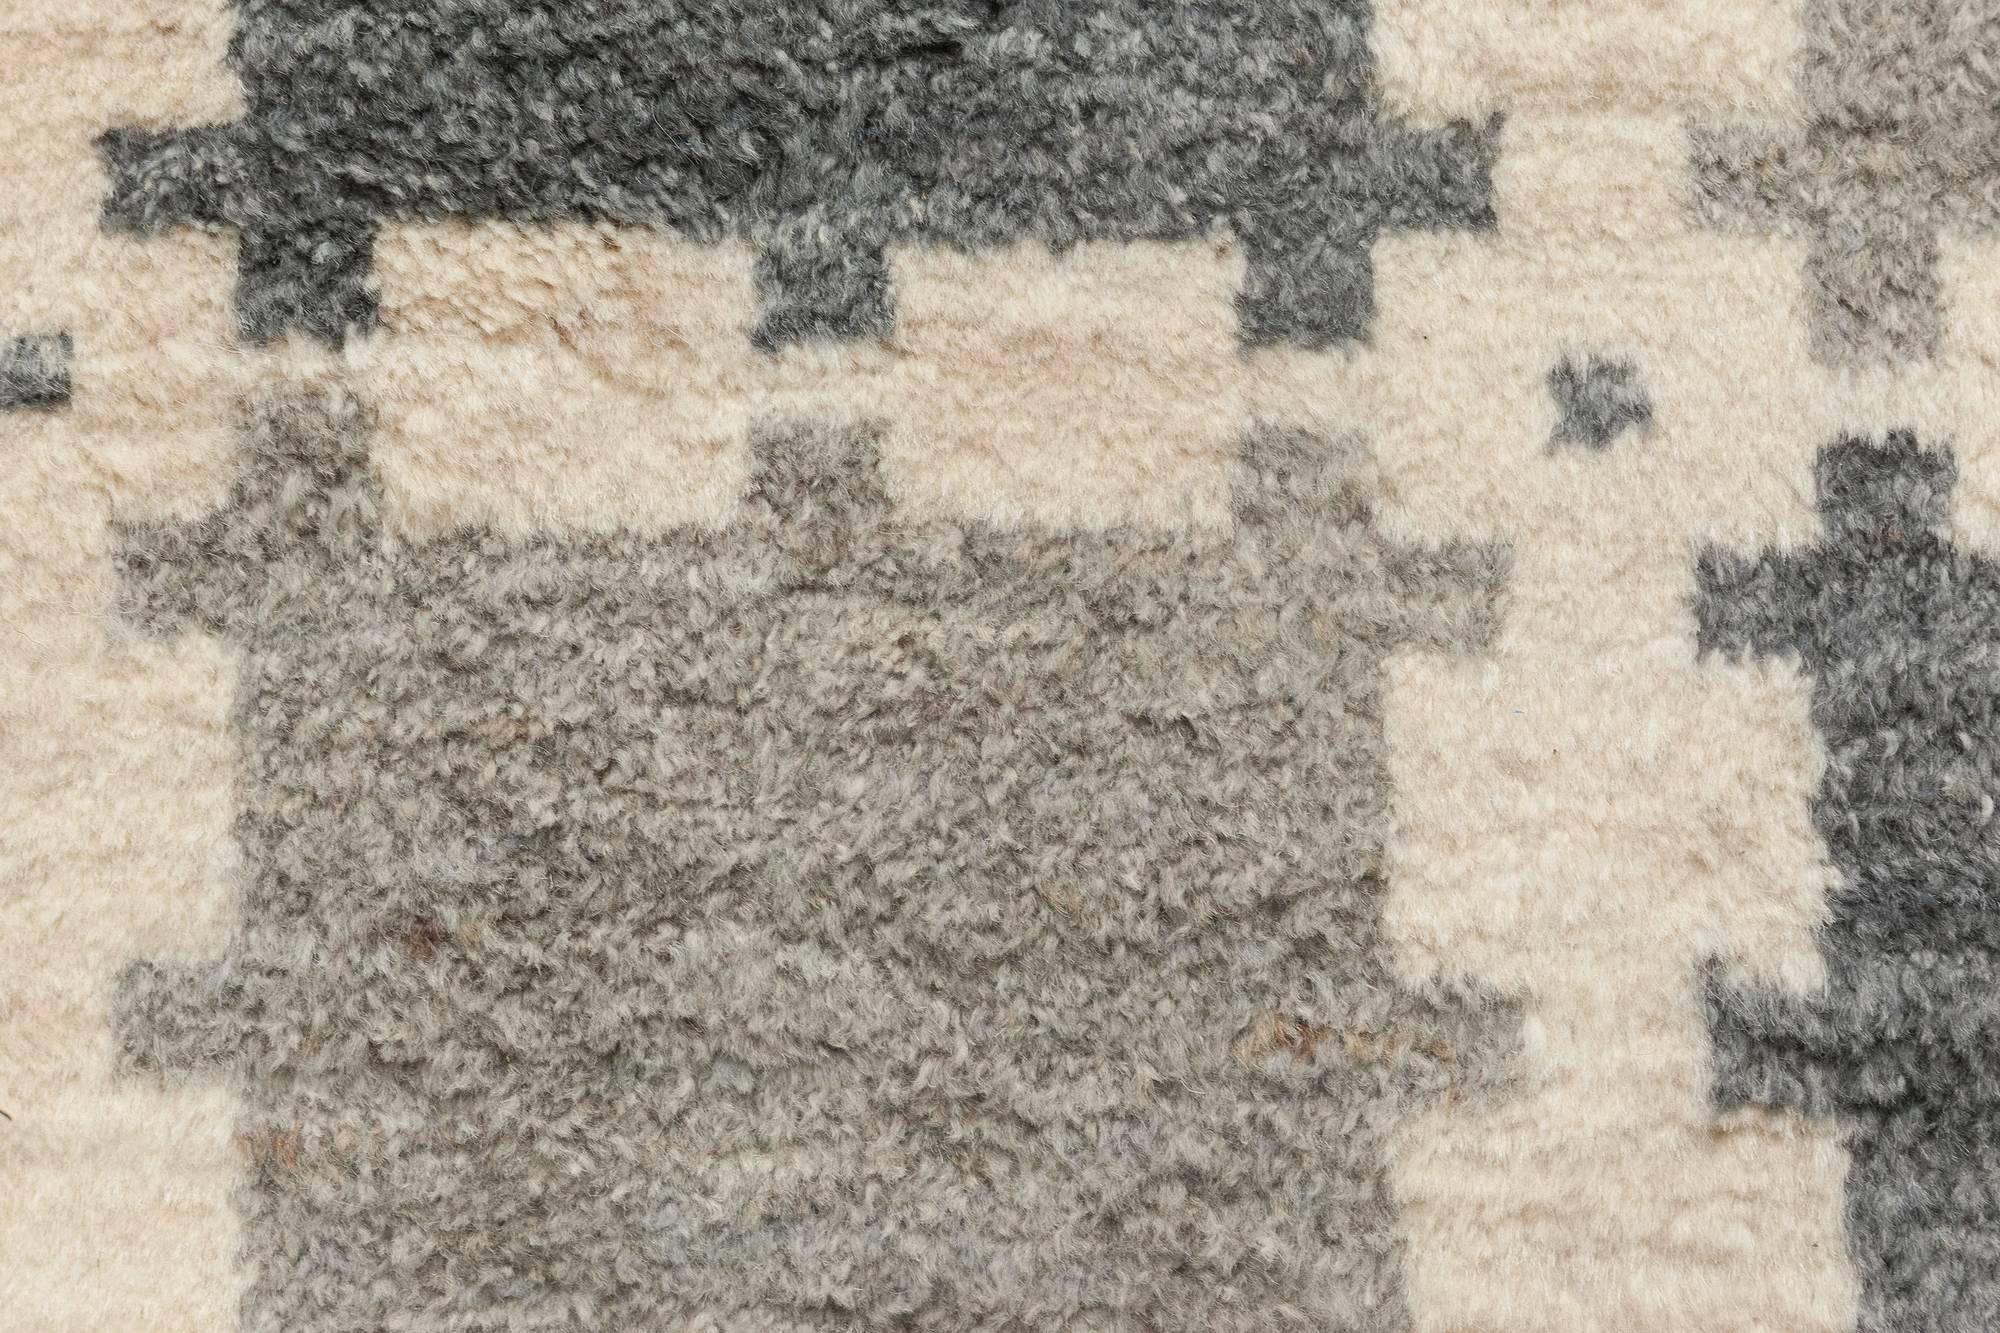 Contemporary Scandinavian design hand knotted wool rug by Doris Leslie Blau
Size: 4'10